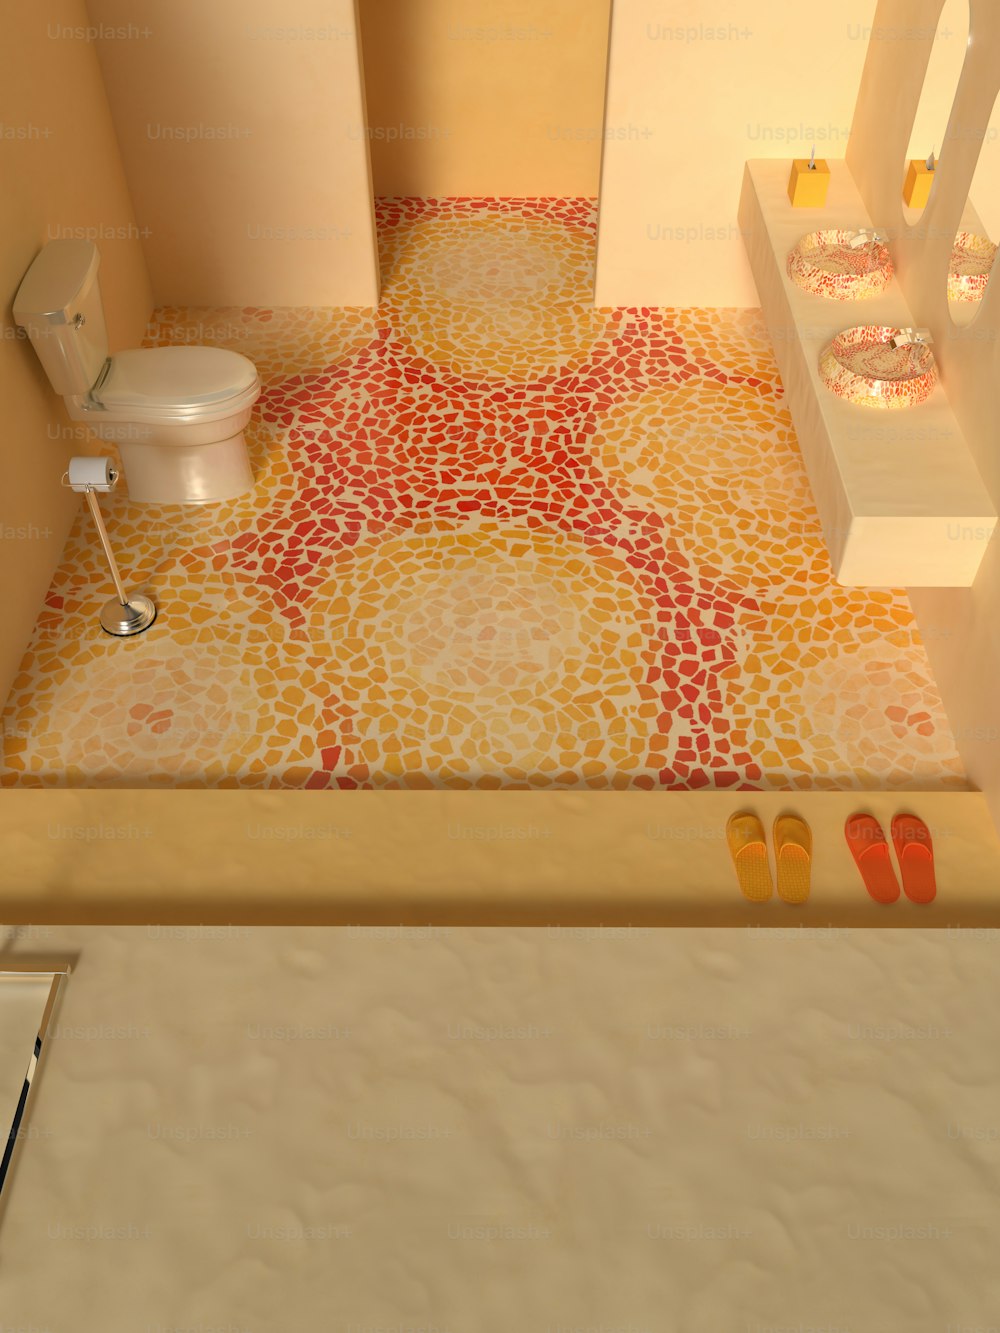 a bathroom with a toilet and a tiled floor